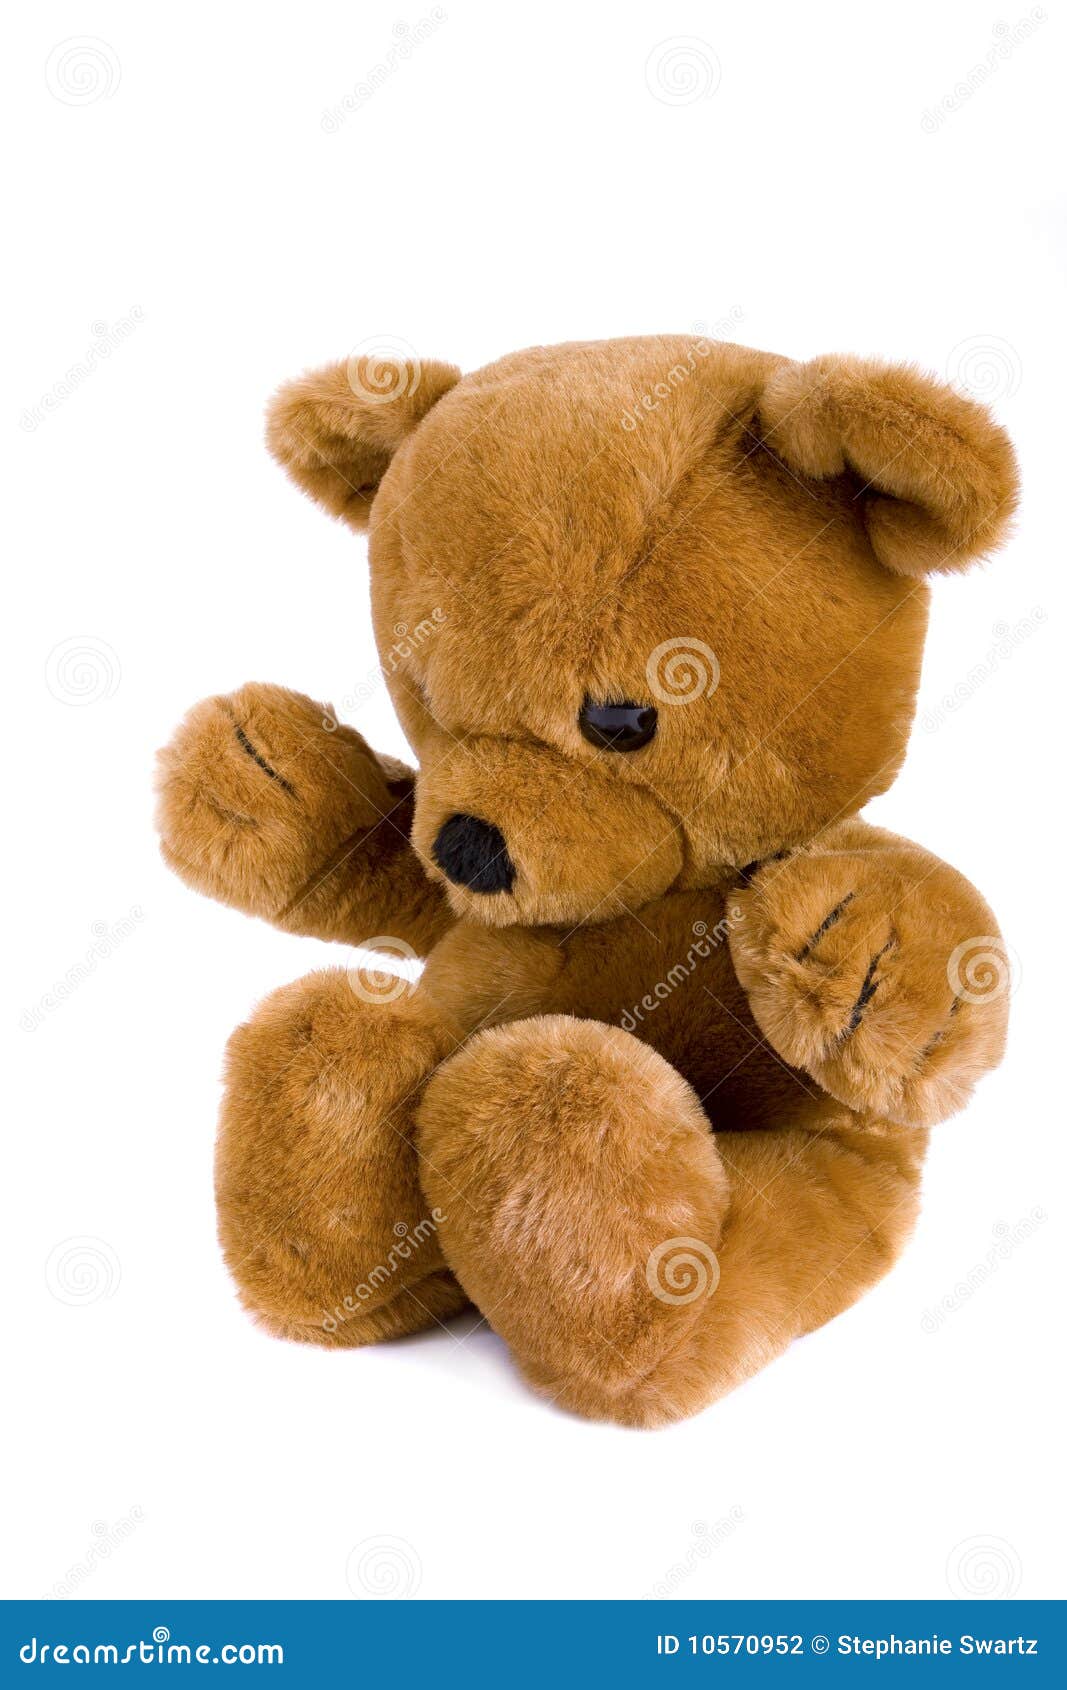 Teddy bear stock photo. Image of face, arctos, cuddle - 10570952